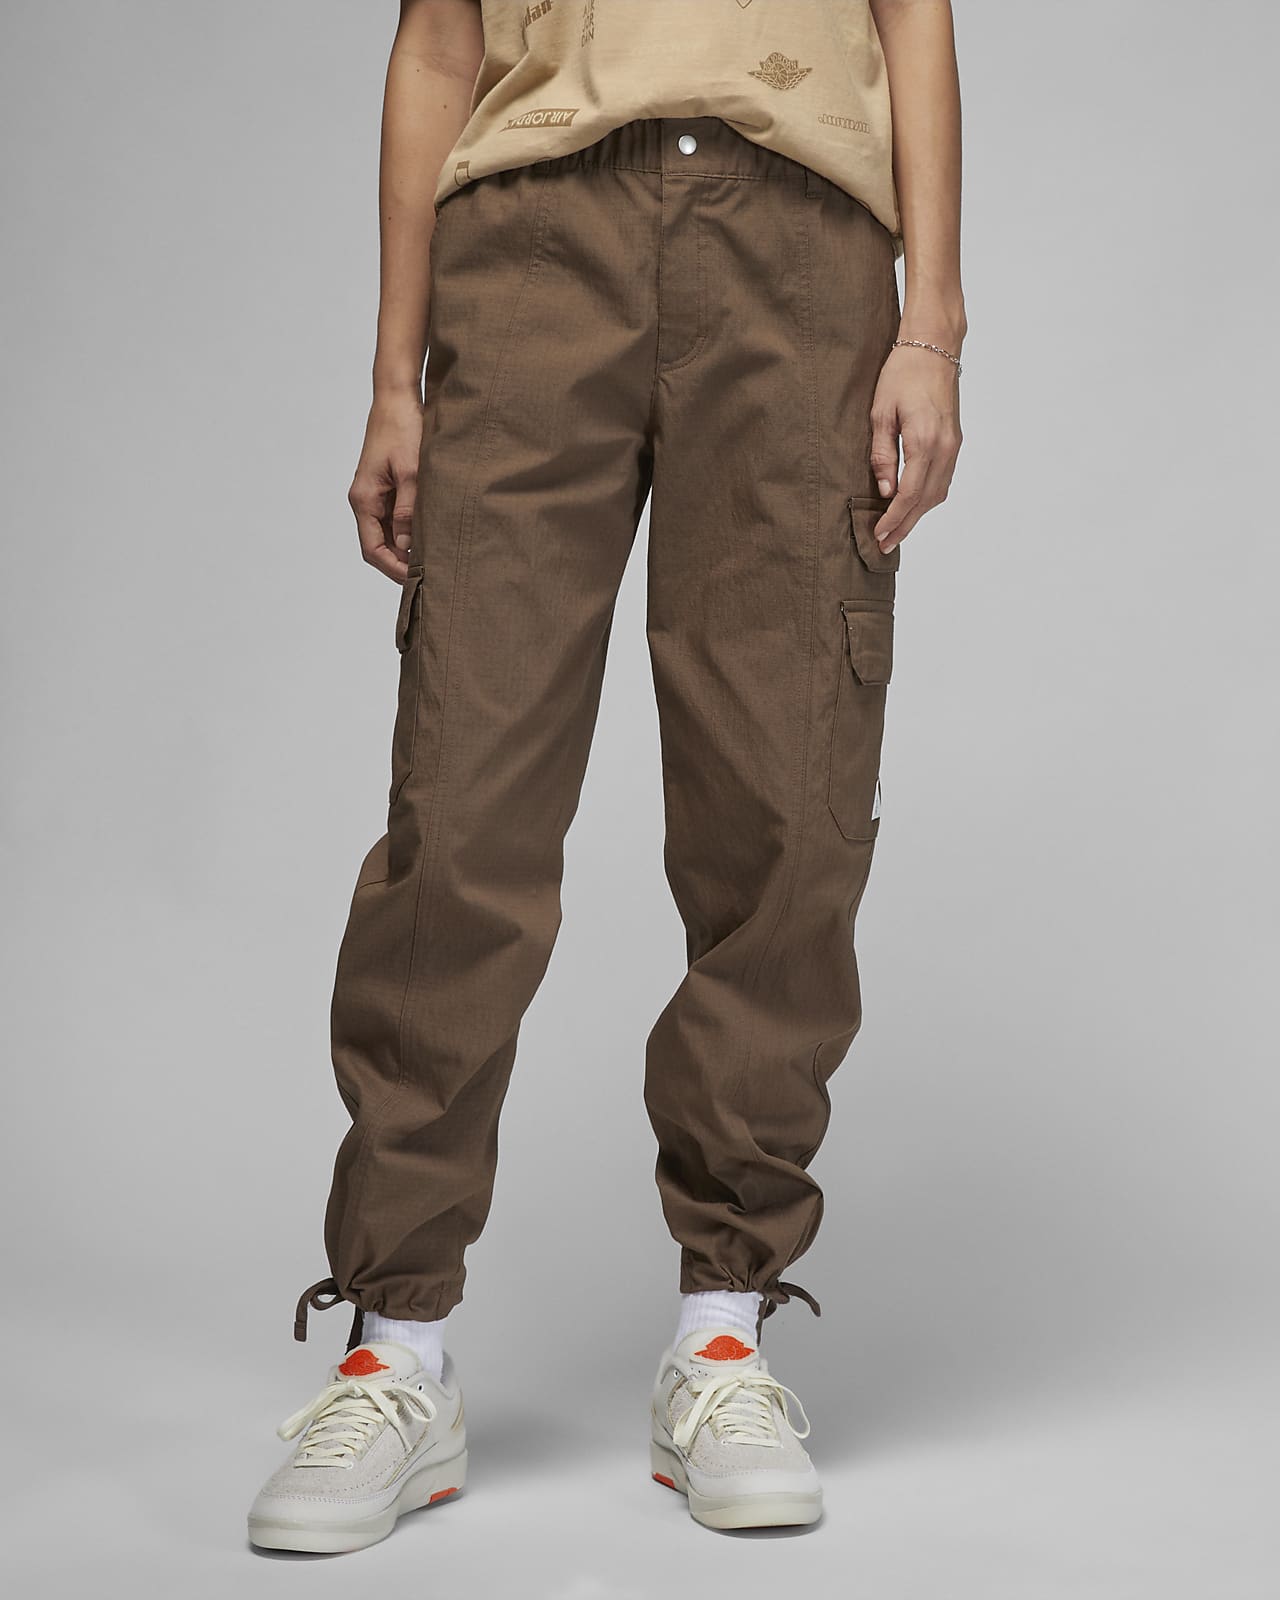 Xavier - OG Cargo Pants (Khaki) – Jordan Craig